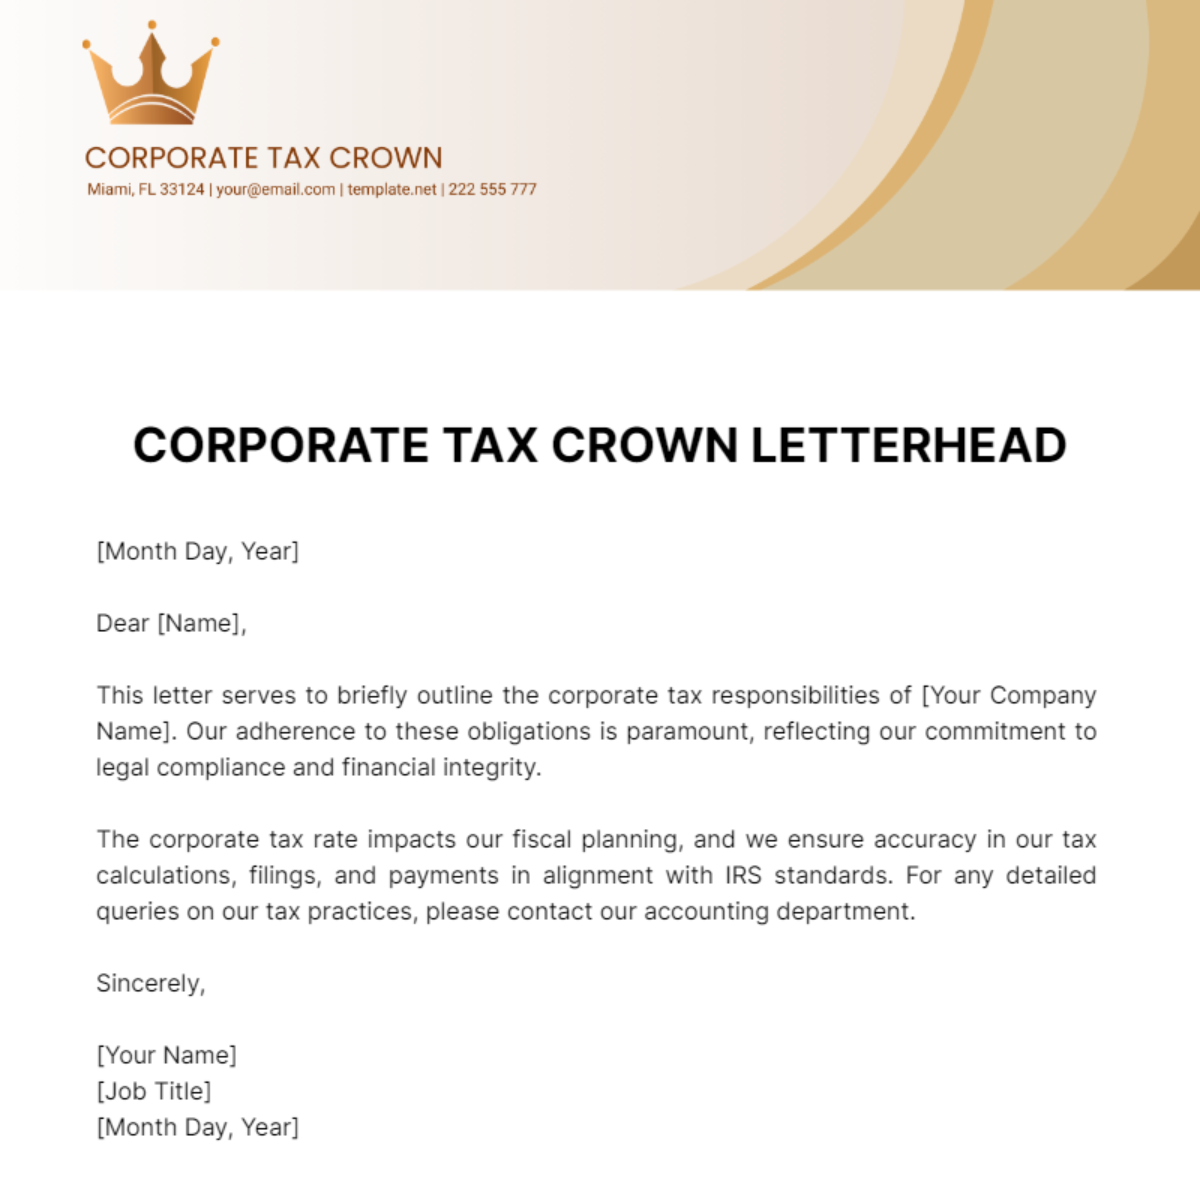 Corporate Tax Crown Letterhead Template